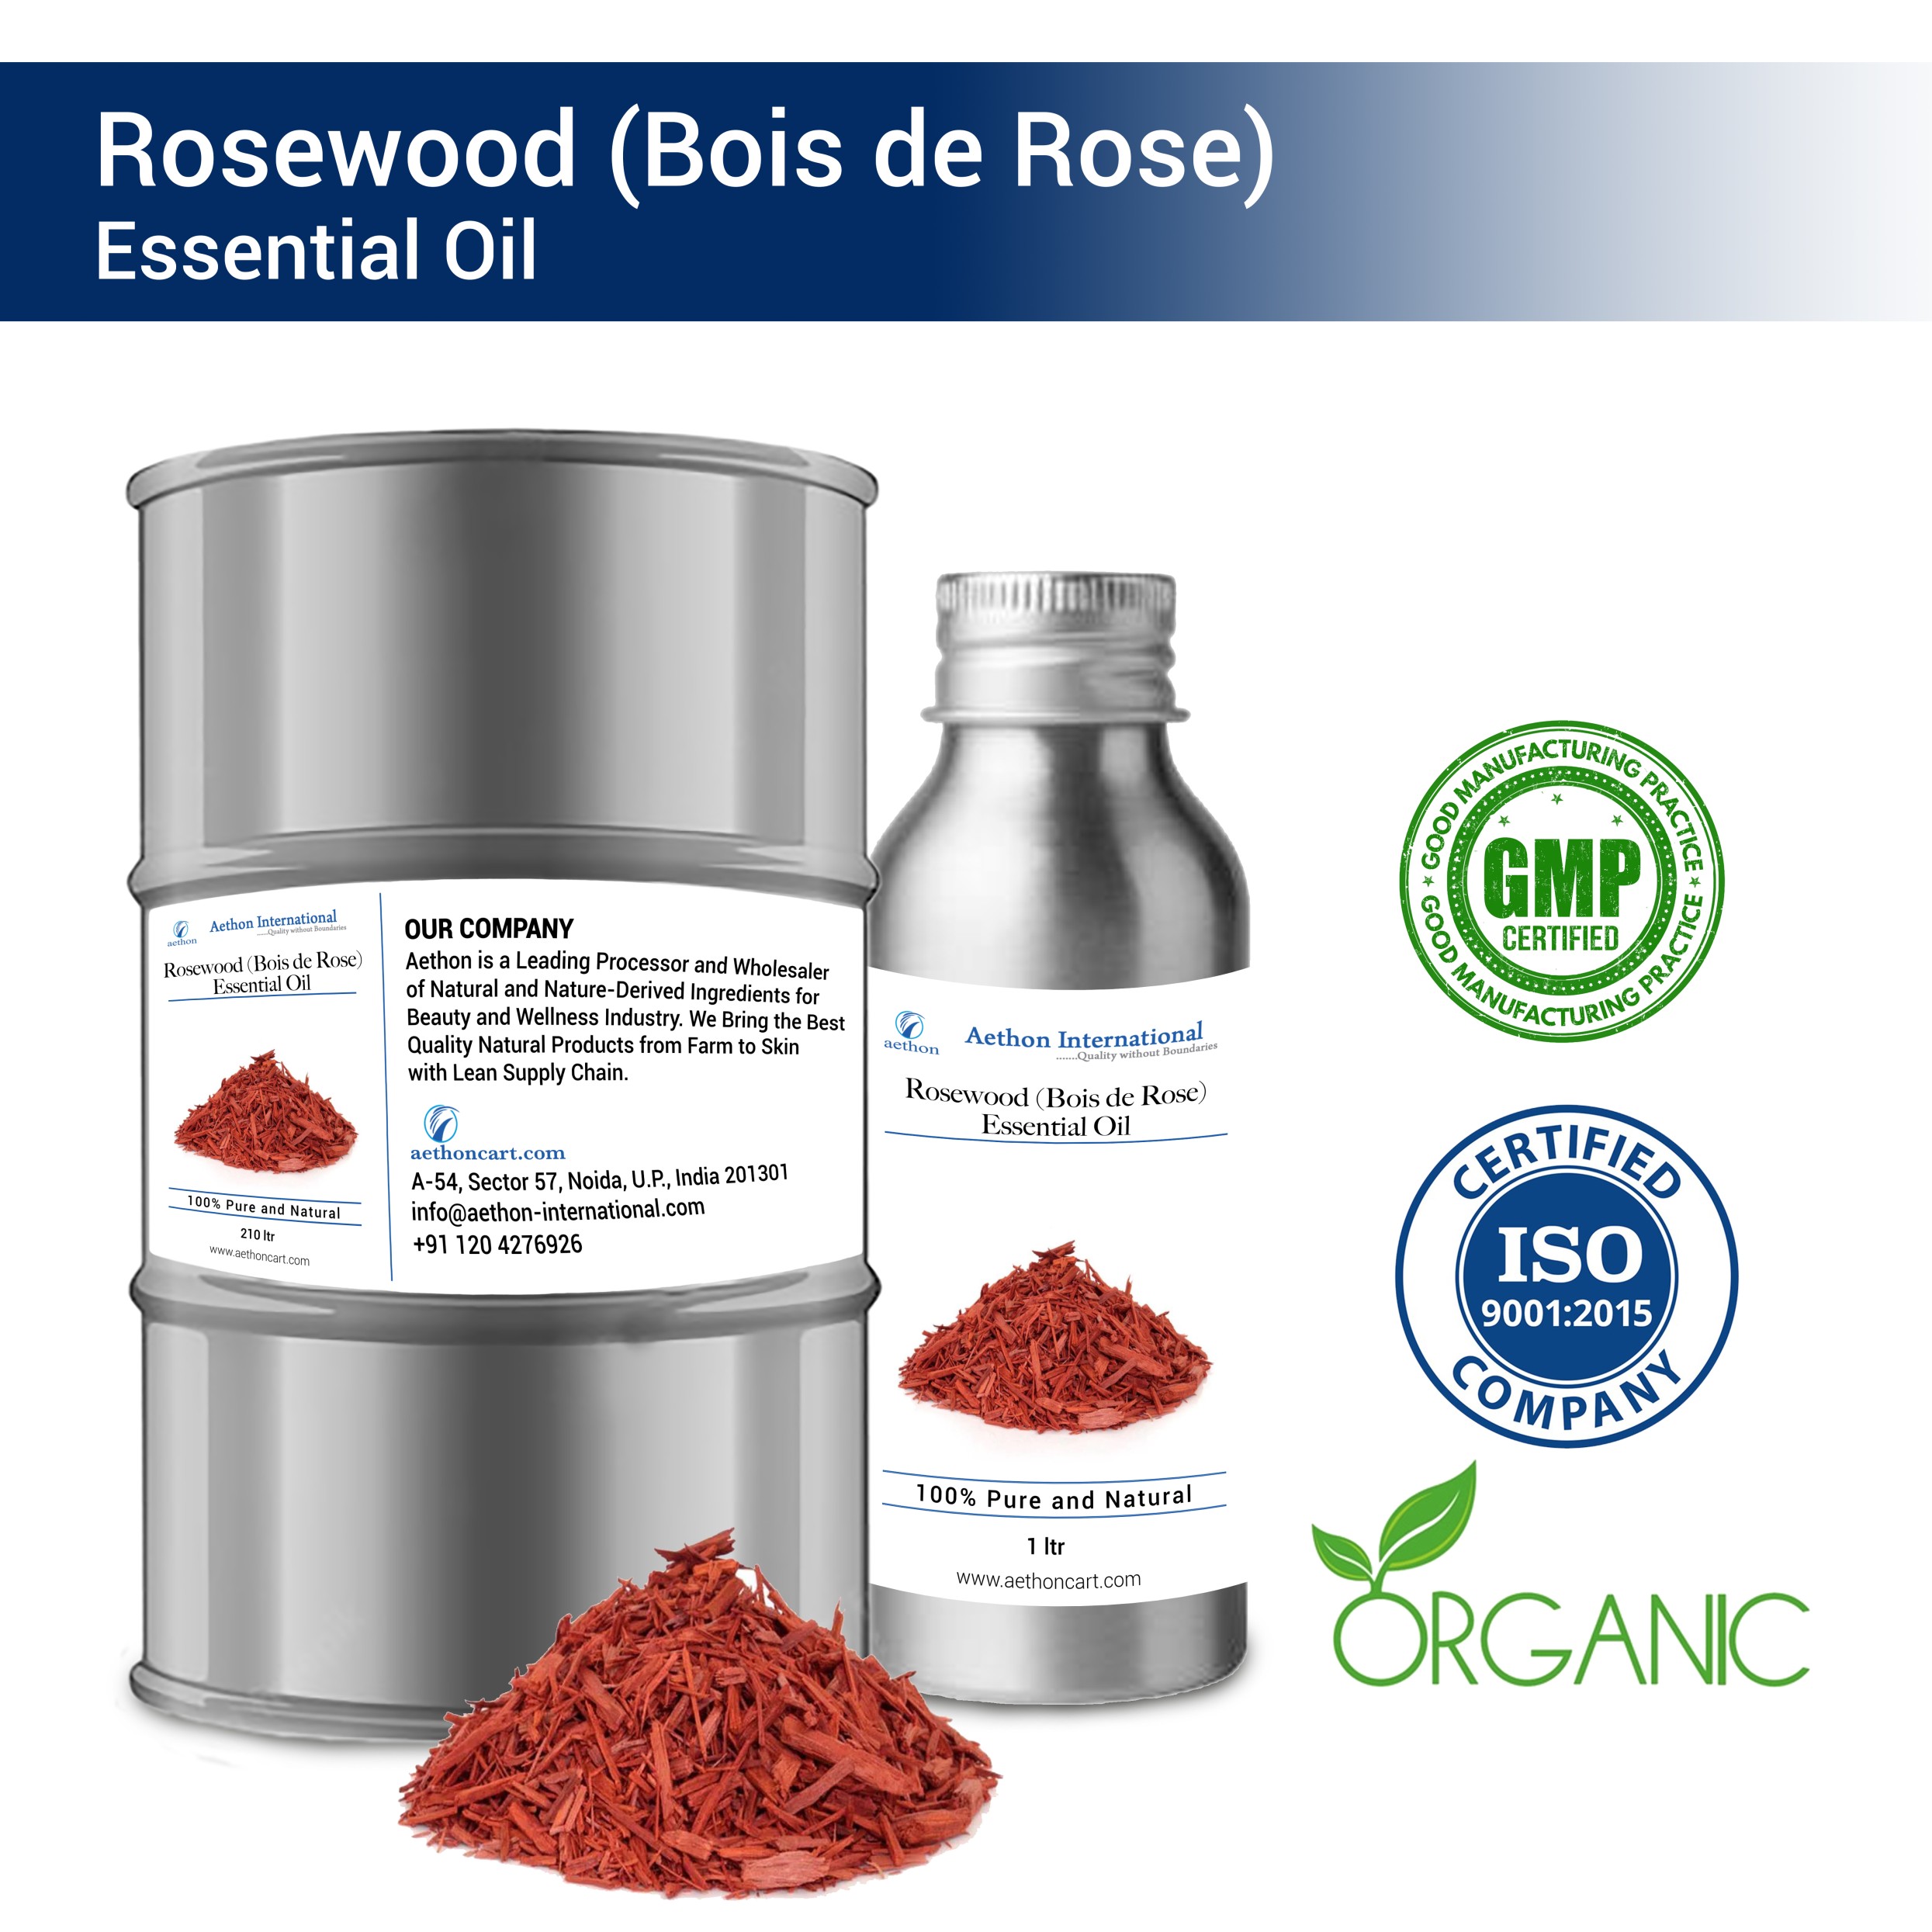 Rosewood (Bois de Rose) Essential Oil